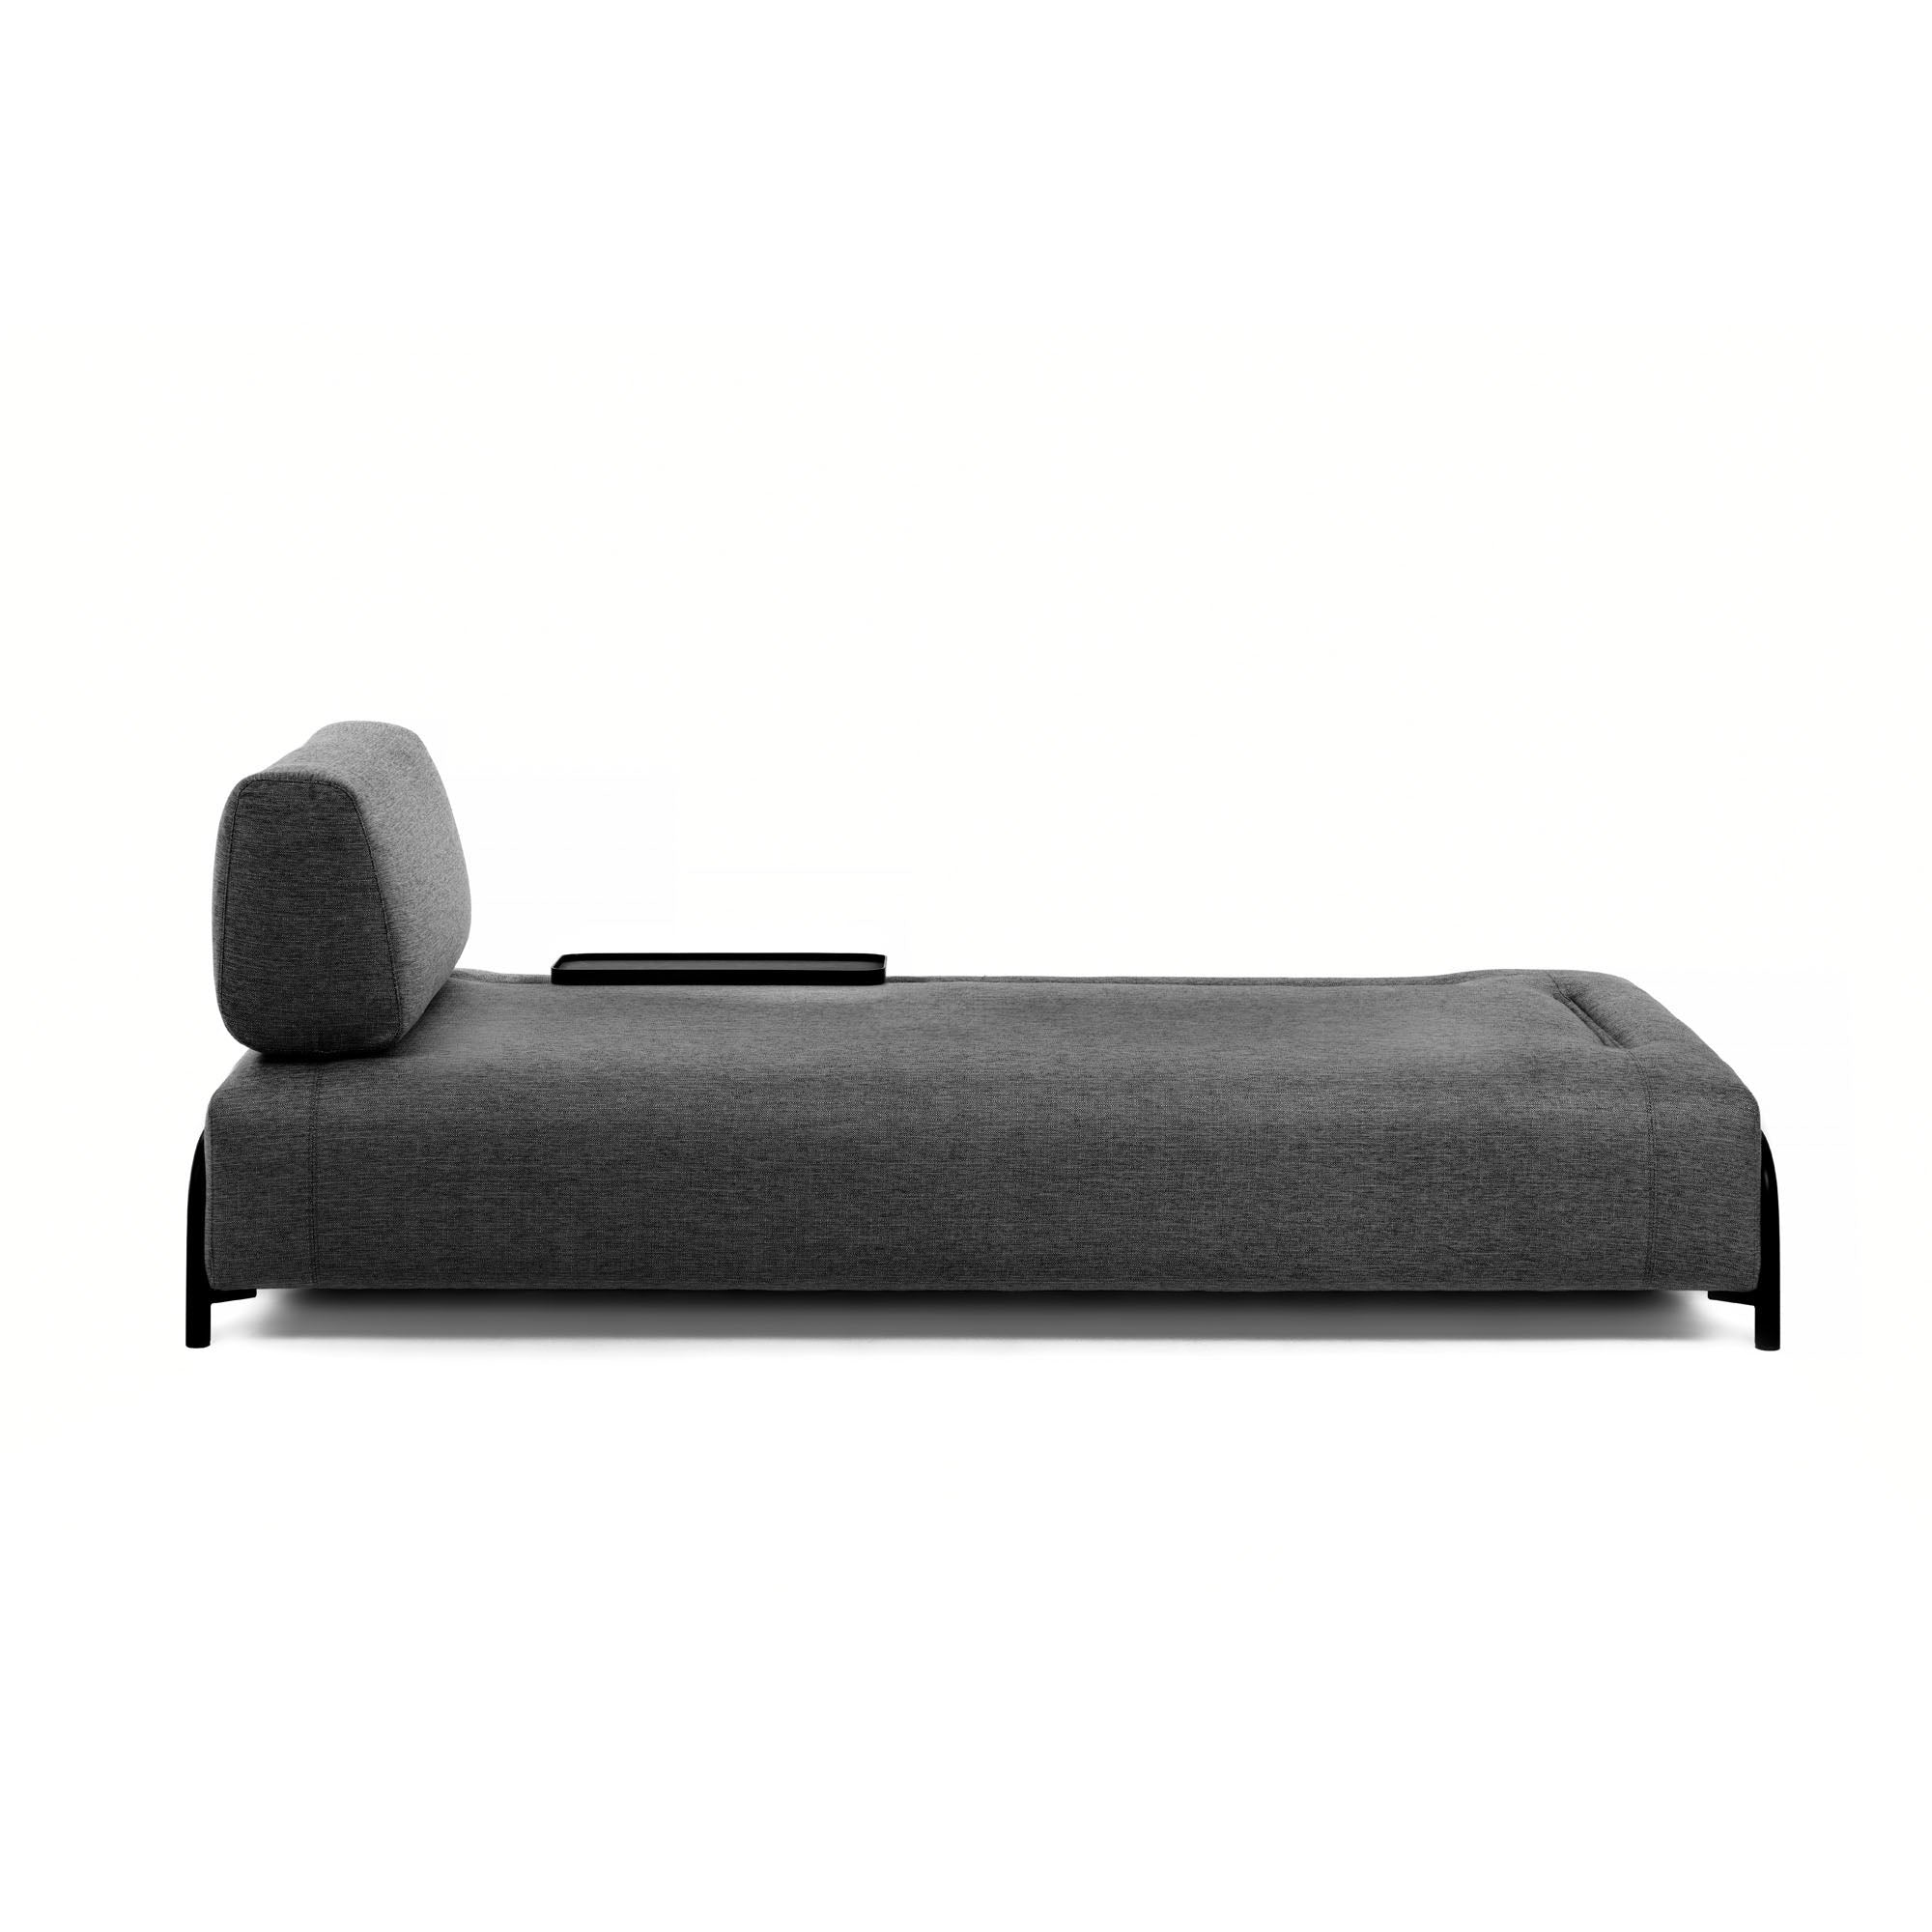 Compo 3 seater sofa with small tray in dark grey, 232 cm